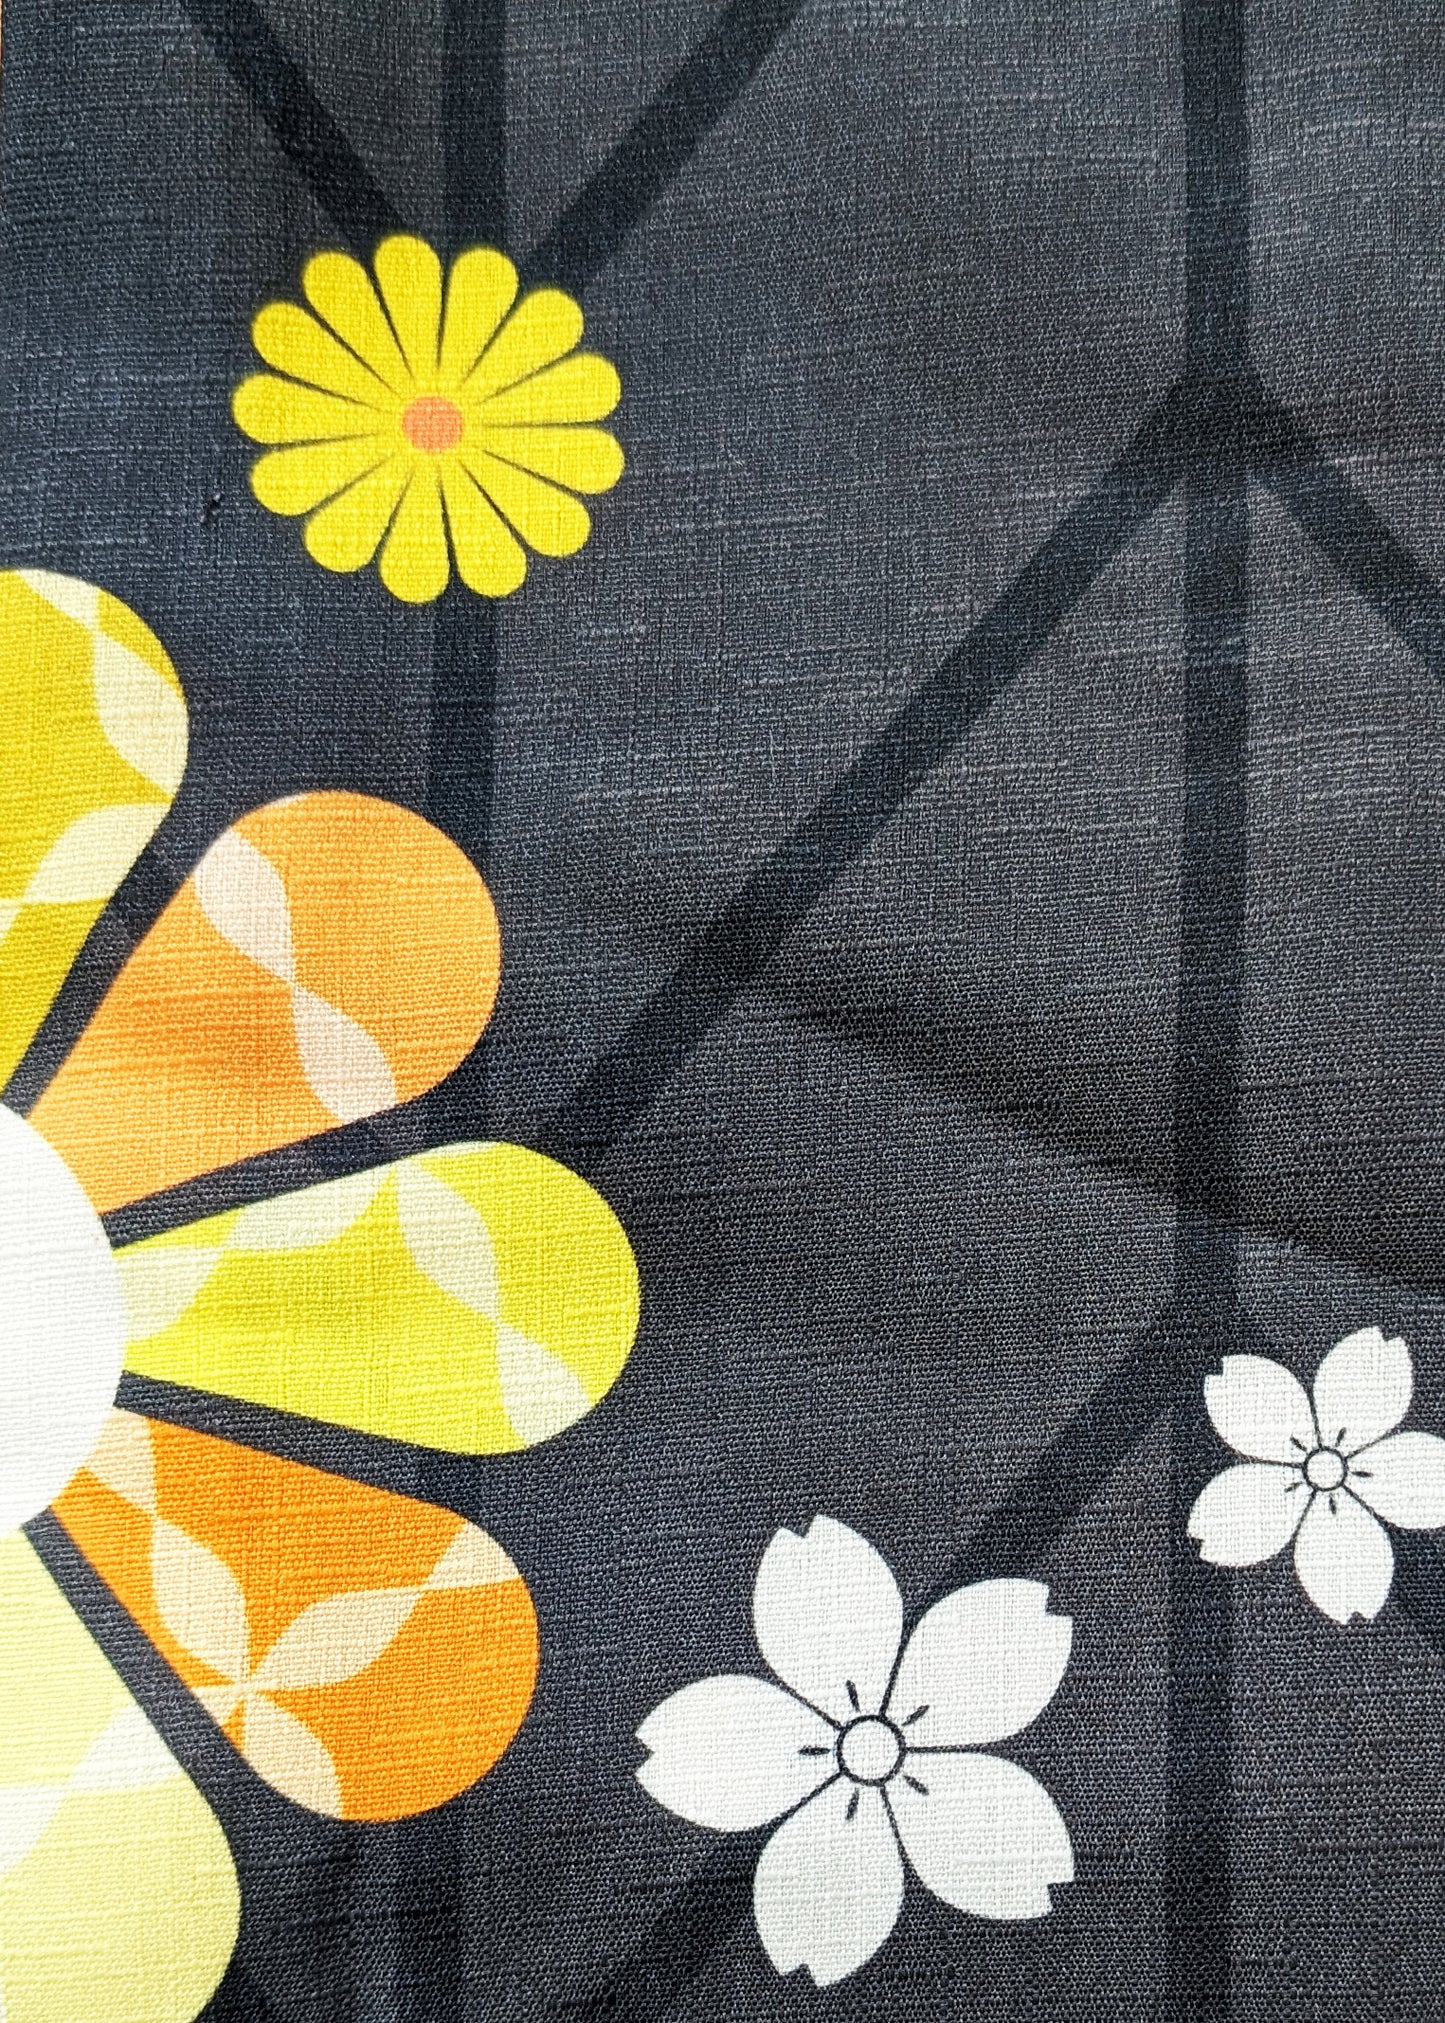 Japanese Yukata Kimono Plus Size - Yellow and Orange Flowers in Patterned Gray